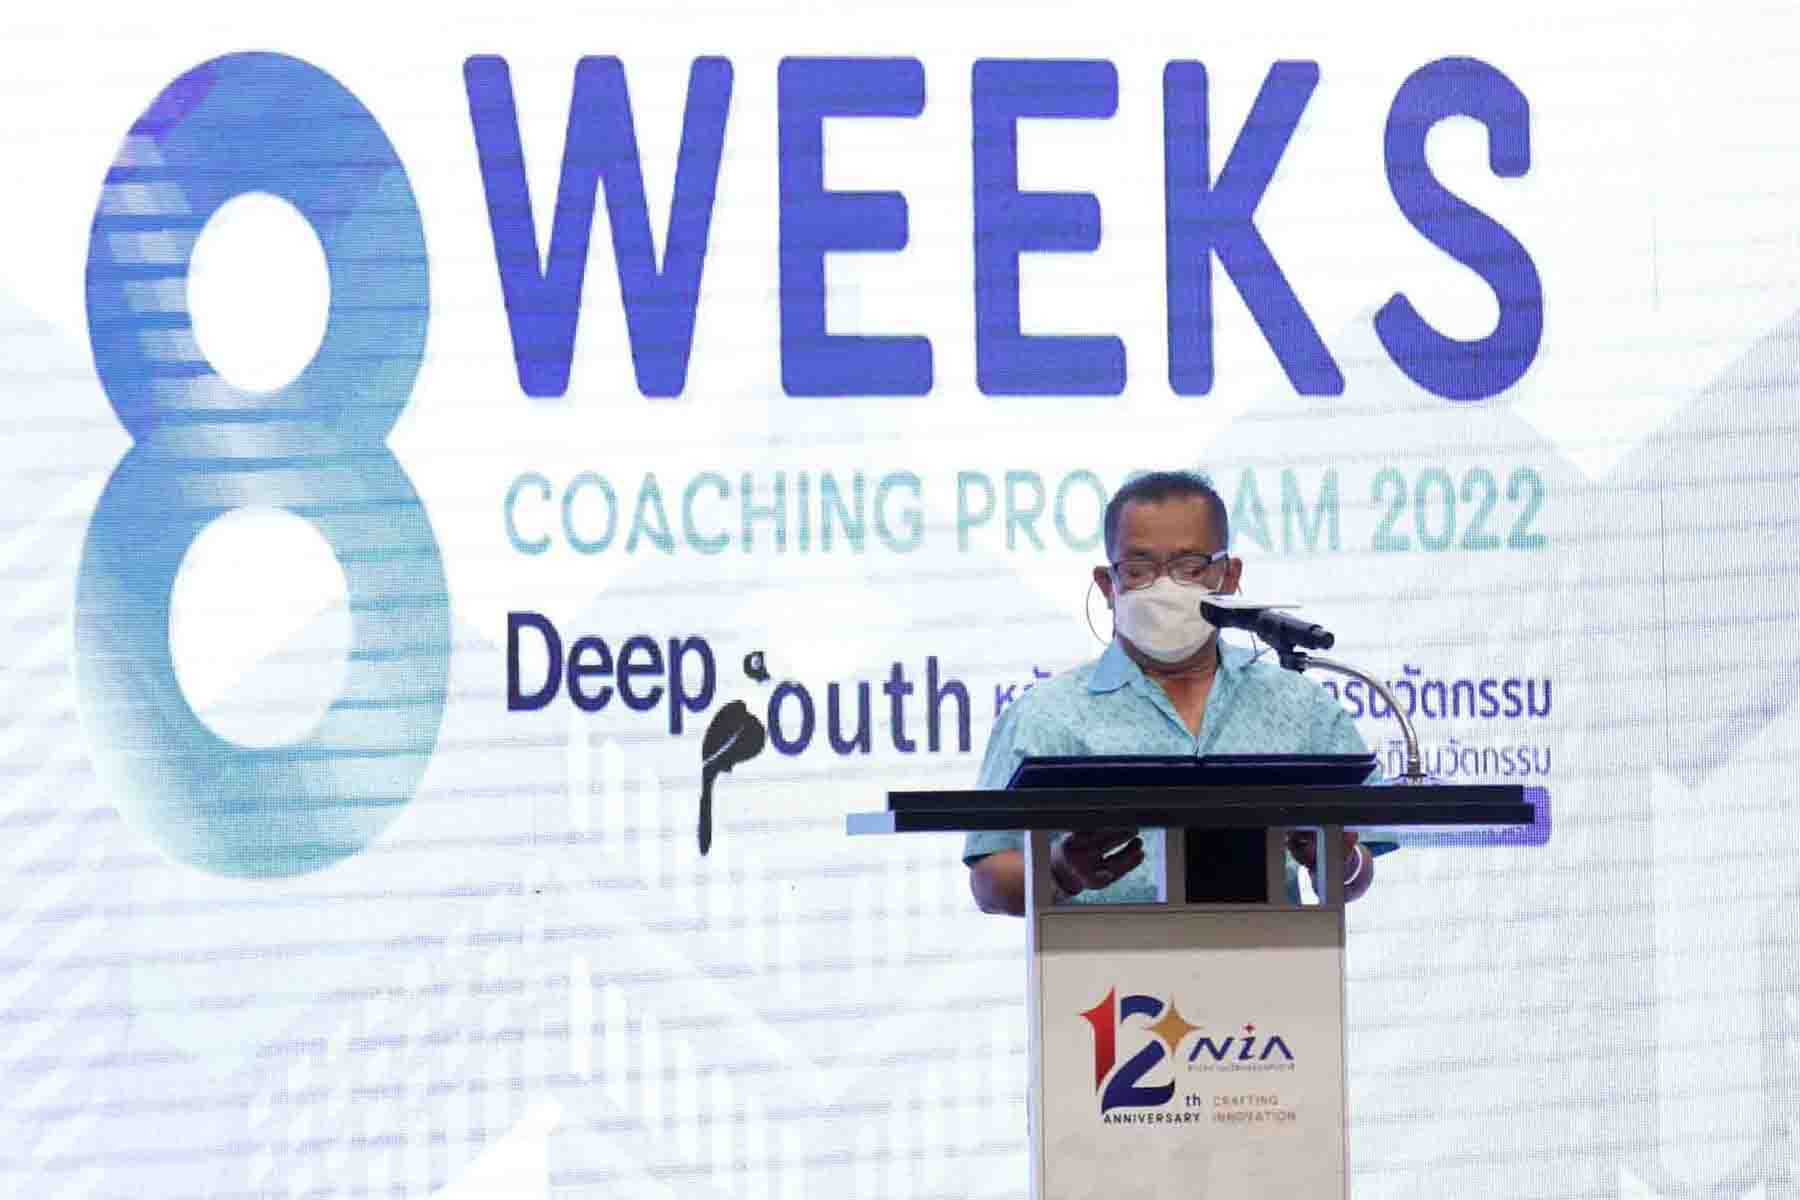 NIA เปิดอบรมหลักสูตร Deep South Innovation Business Coaching Program 2022 ให้ผู้ประกอบการในจังหวัดชายแดนใต้